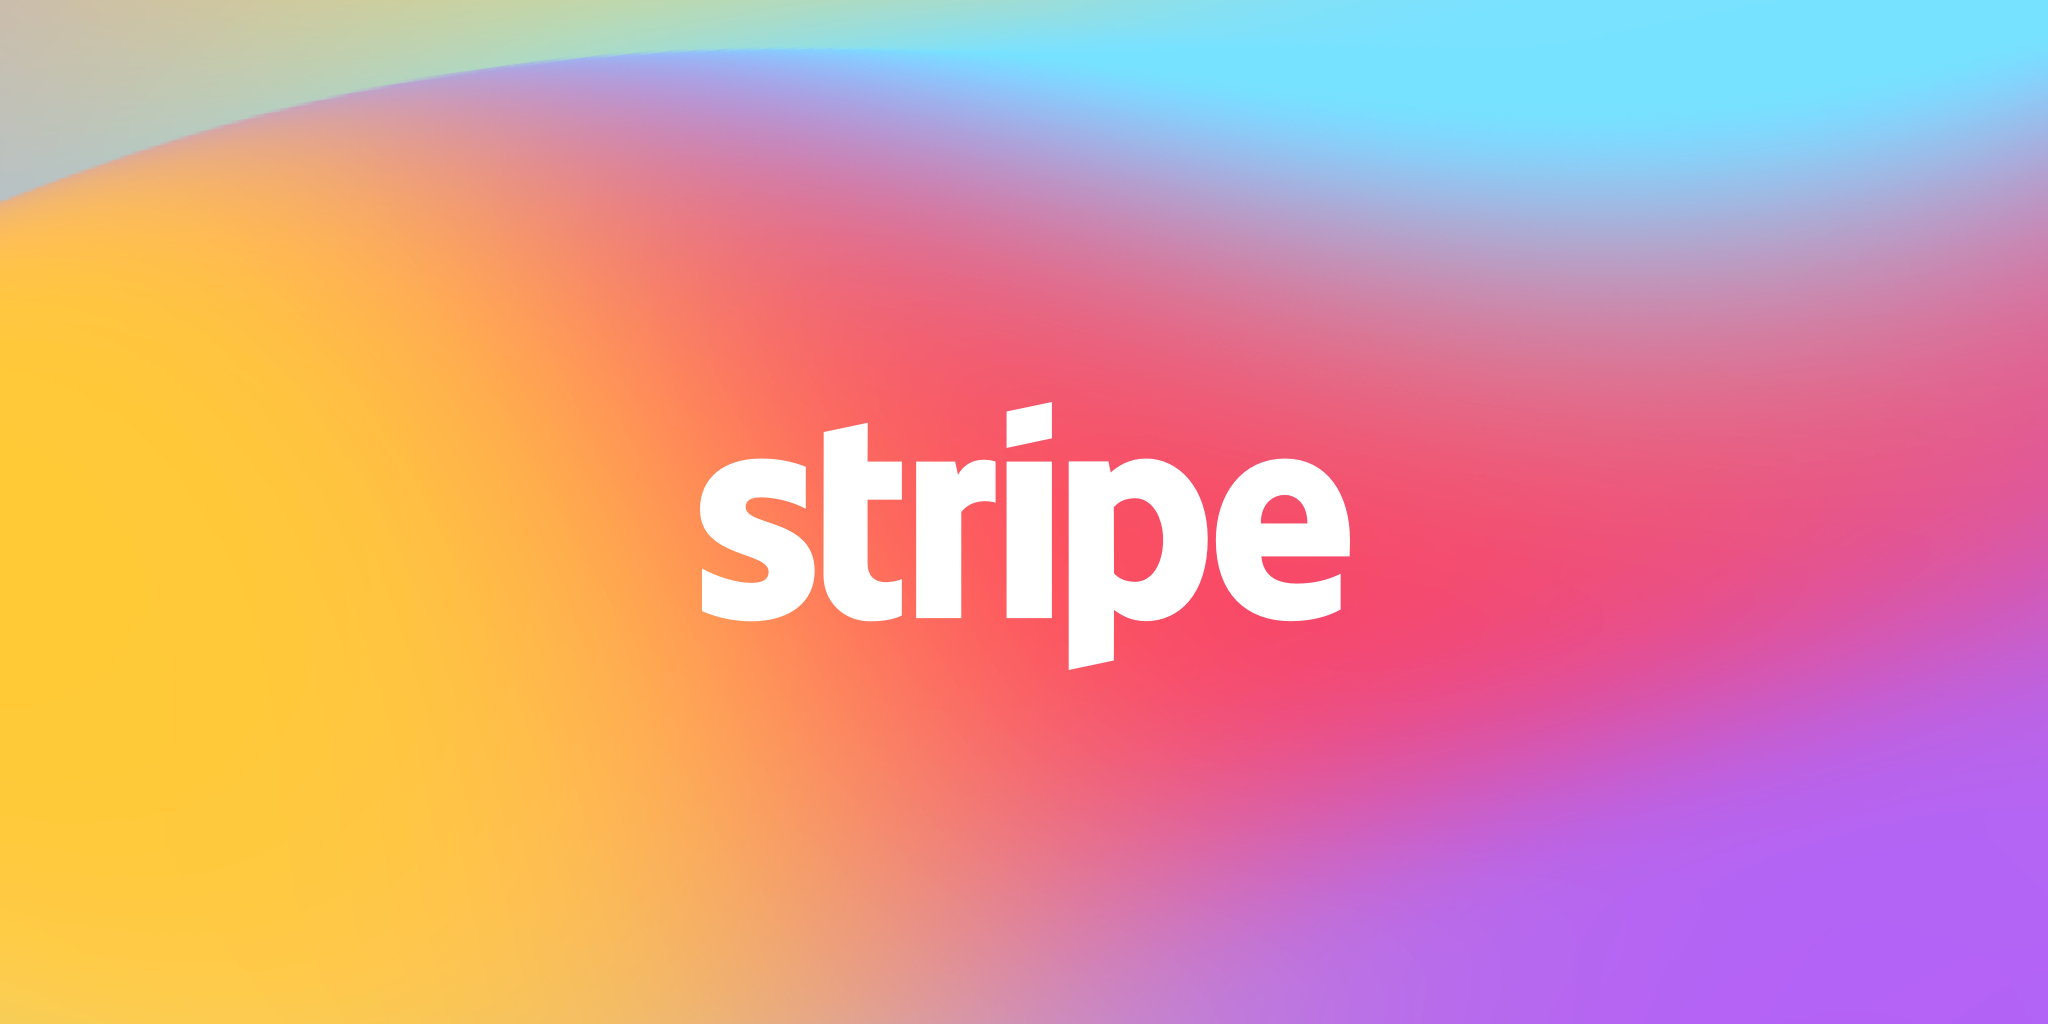 Stripe image